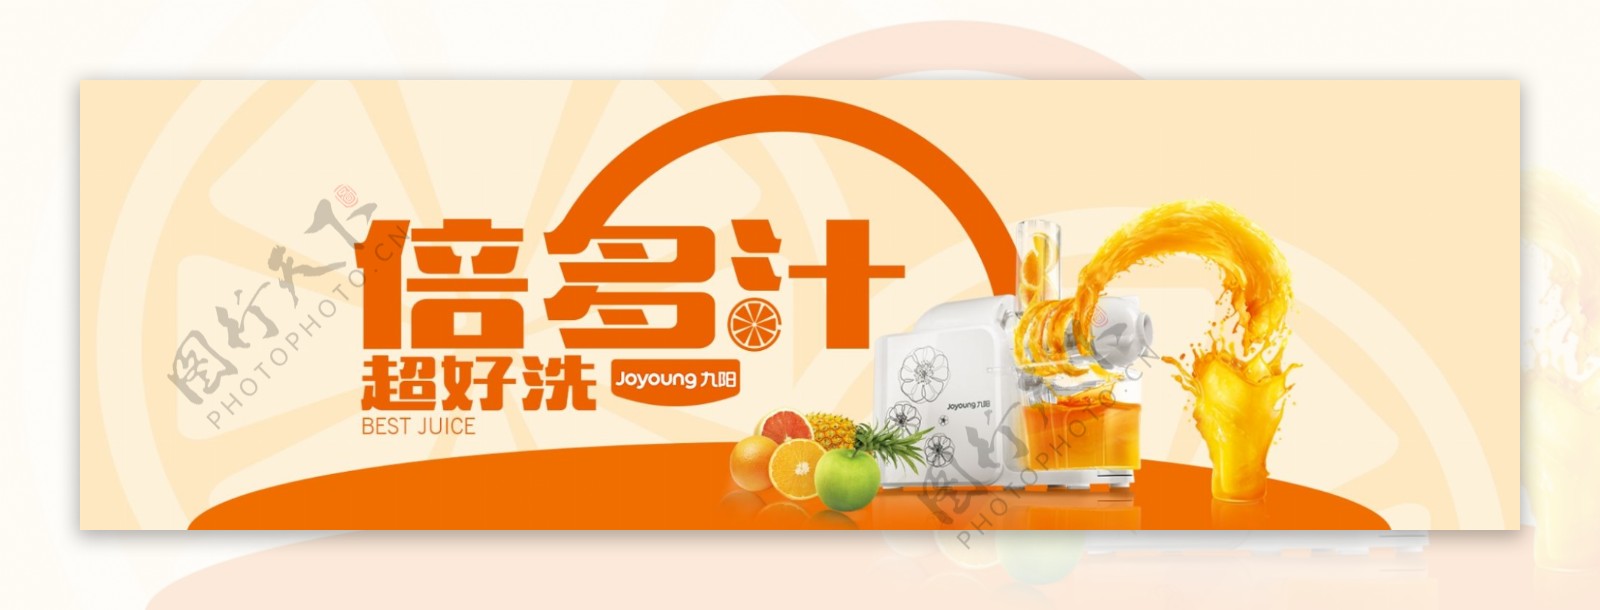 九阳果汁榨汁机banner